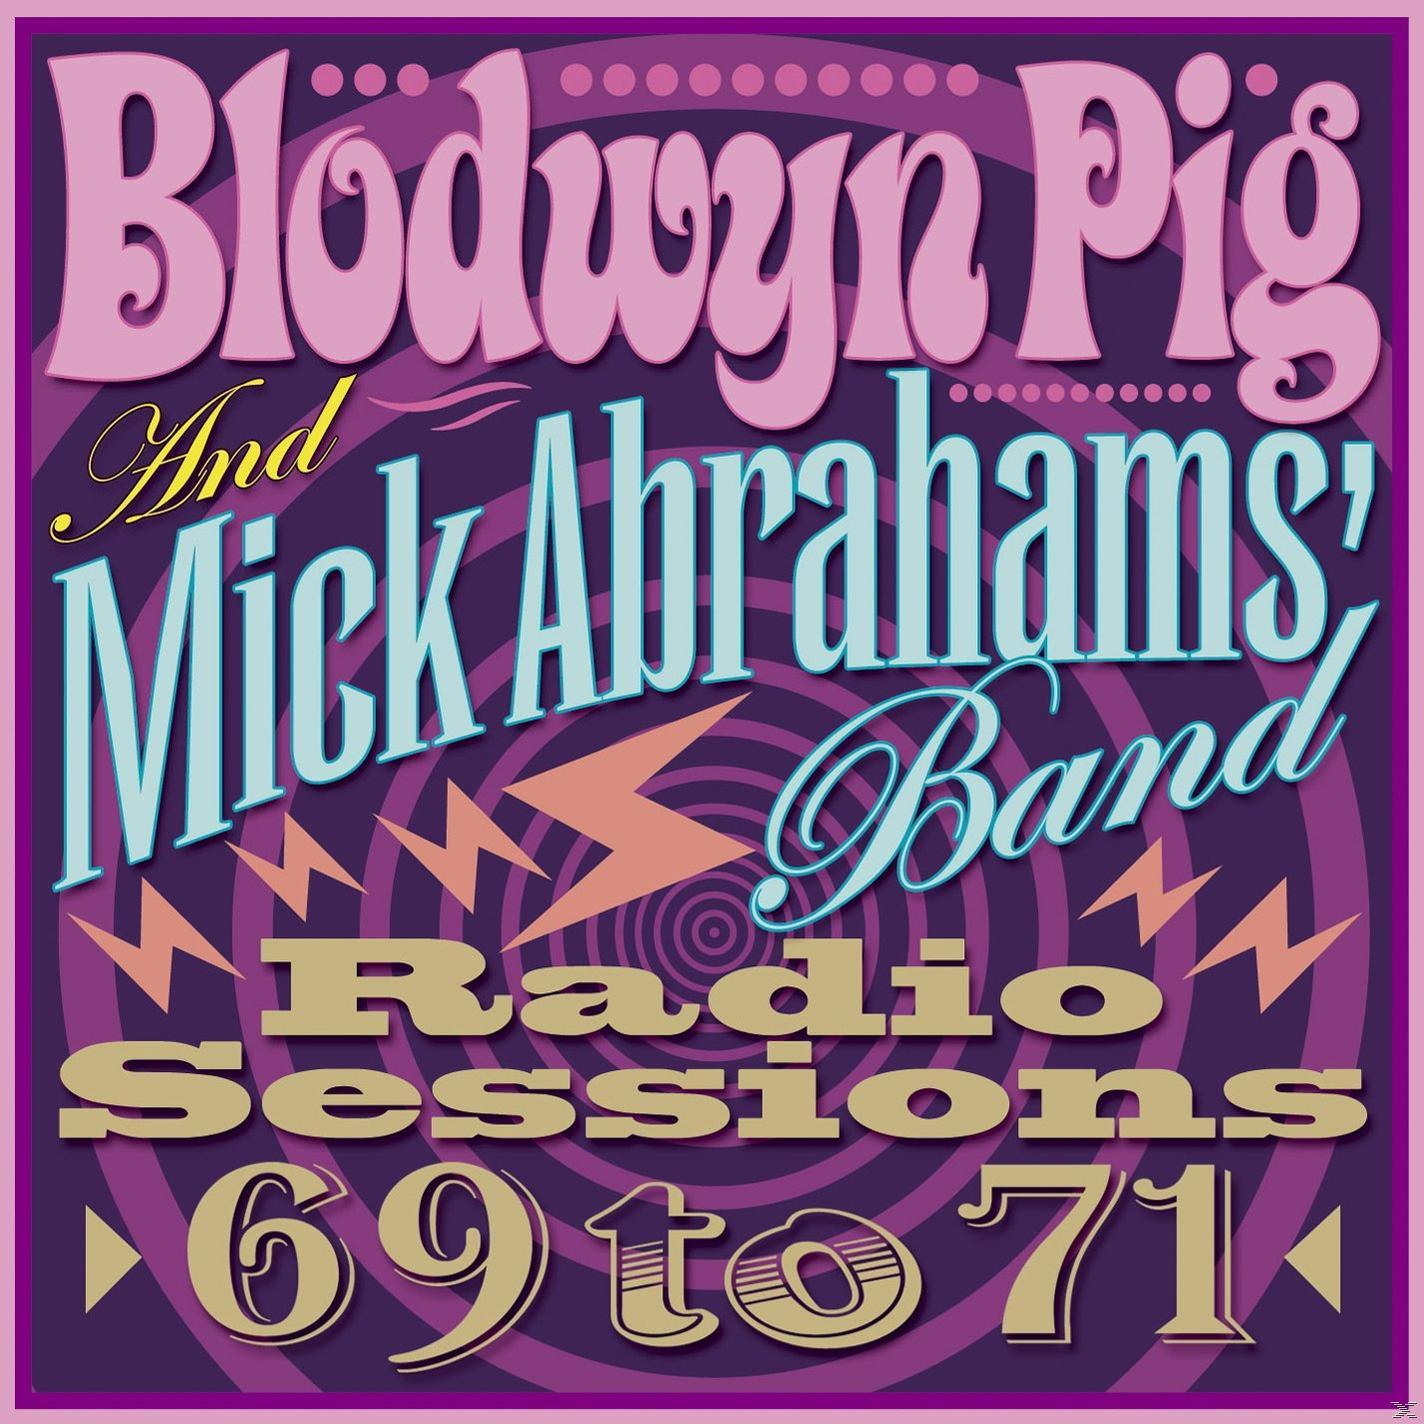 (CD) Sessions & - Radio Mick Abrahams Pig, Band - 1969-1971 Blodwyn